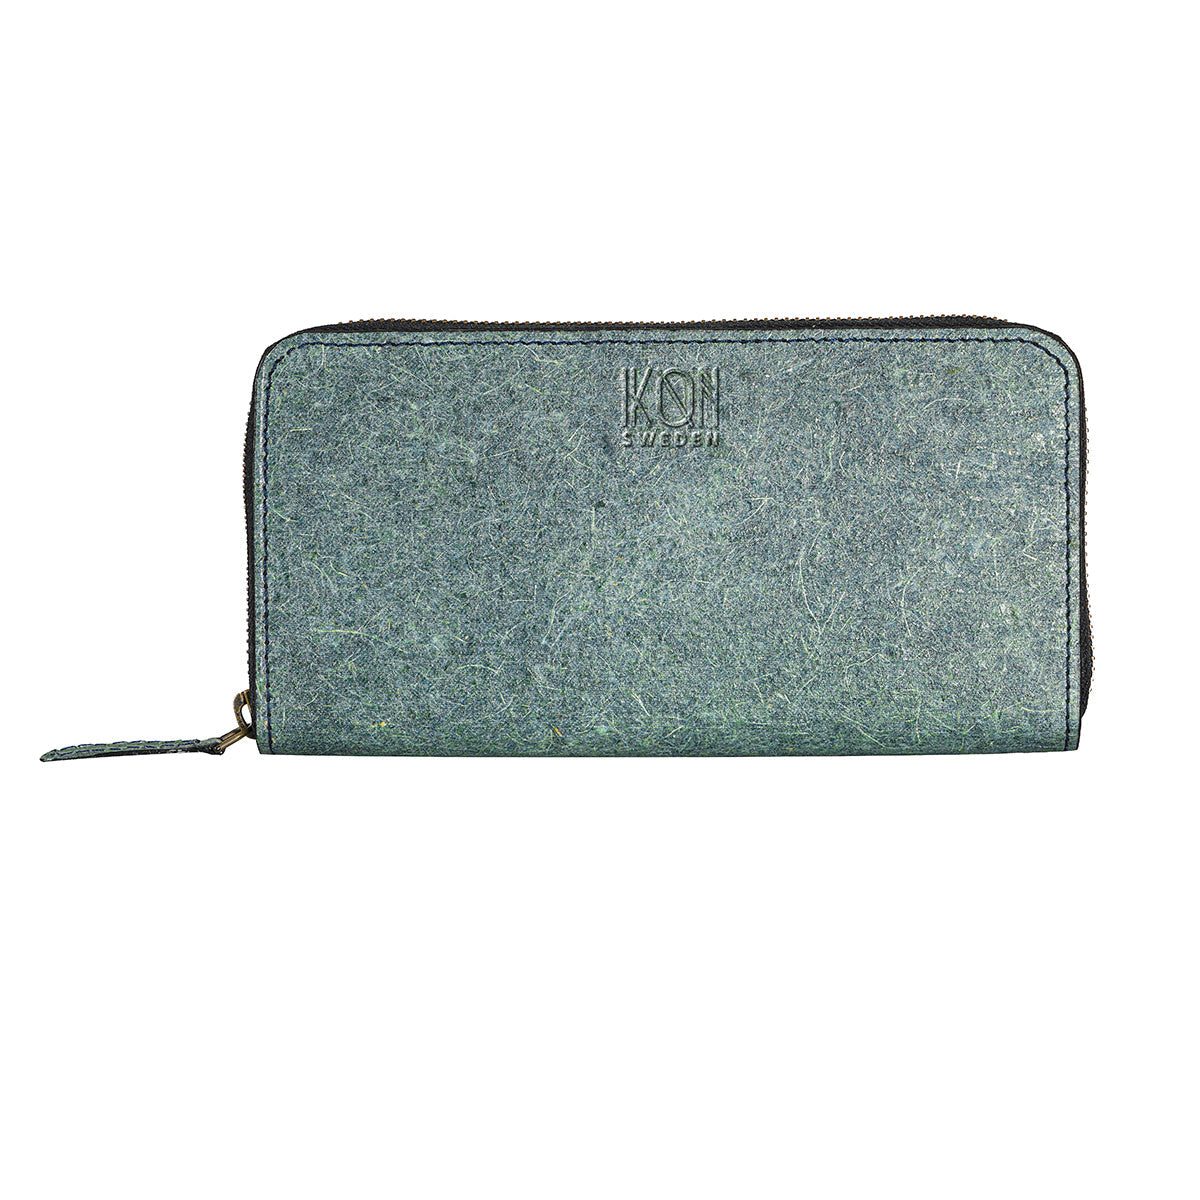 Coconut Leather Long Zip Wallet for Women - Ocean Green